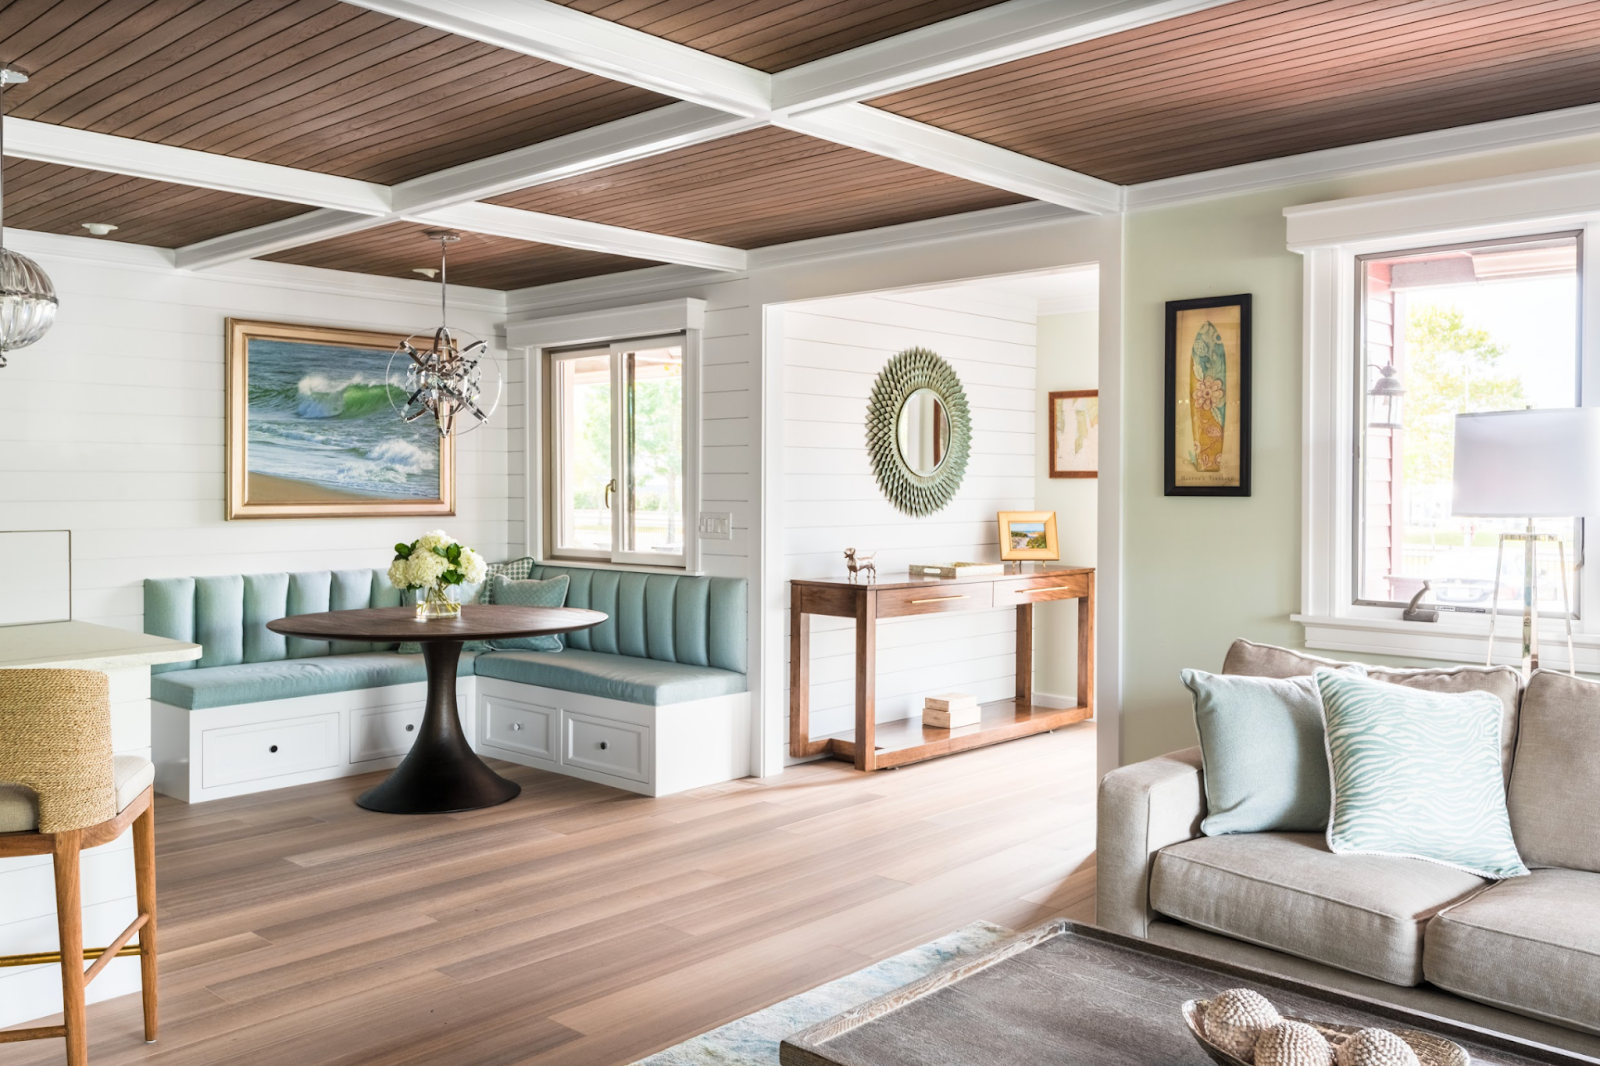 Bringing the coastal grandmother interior design style home